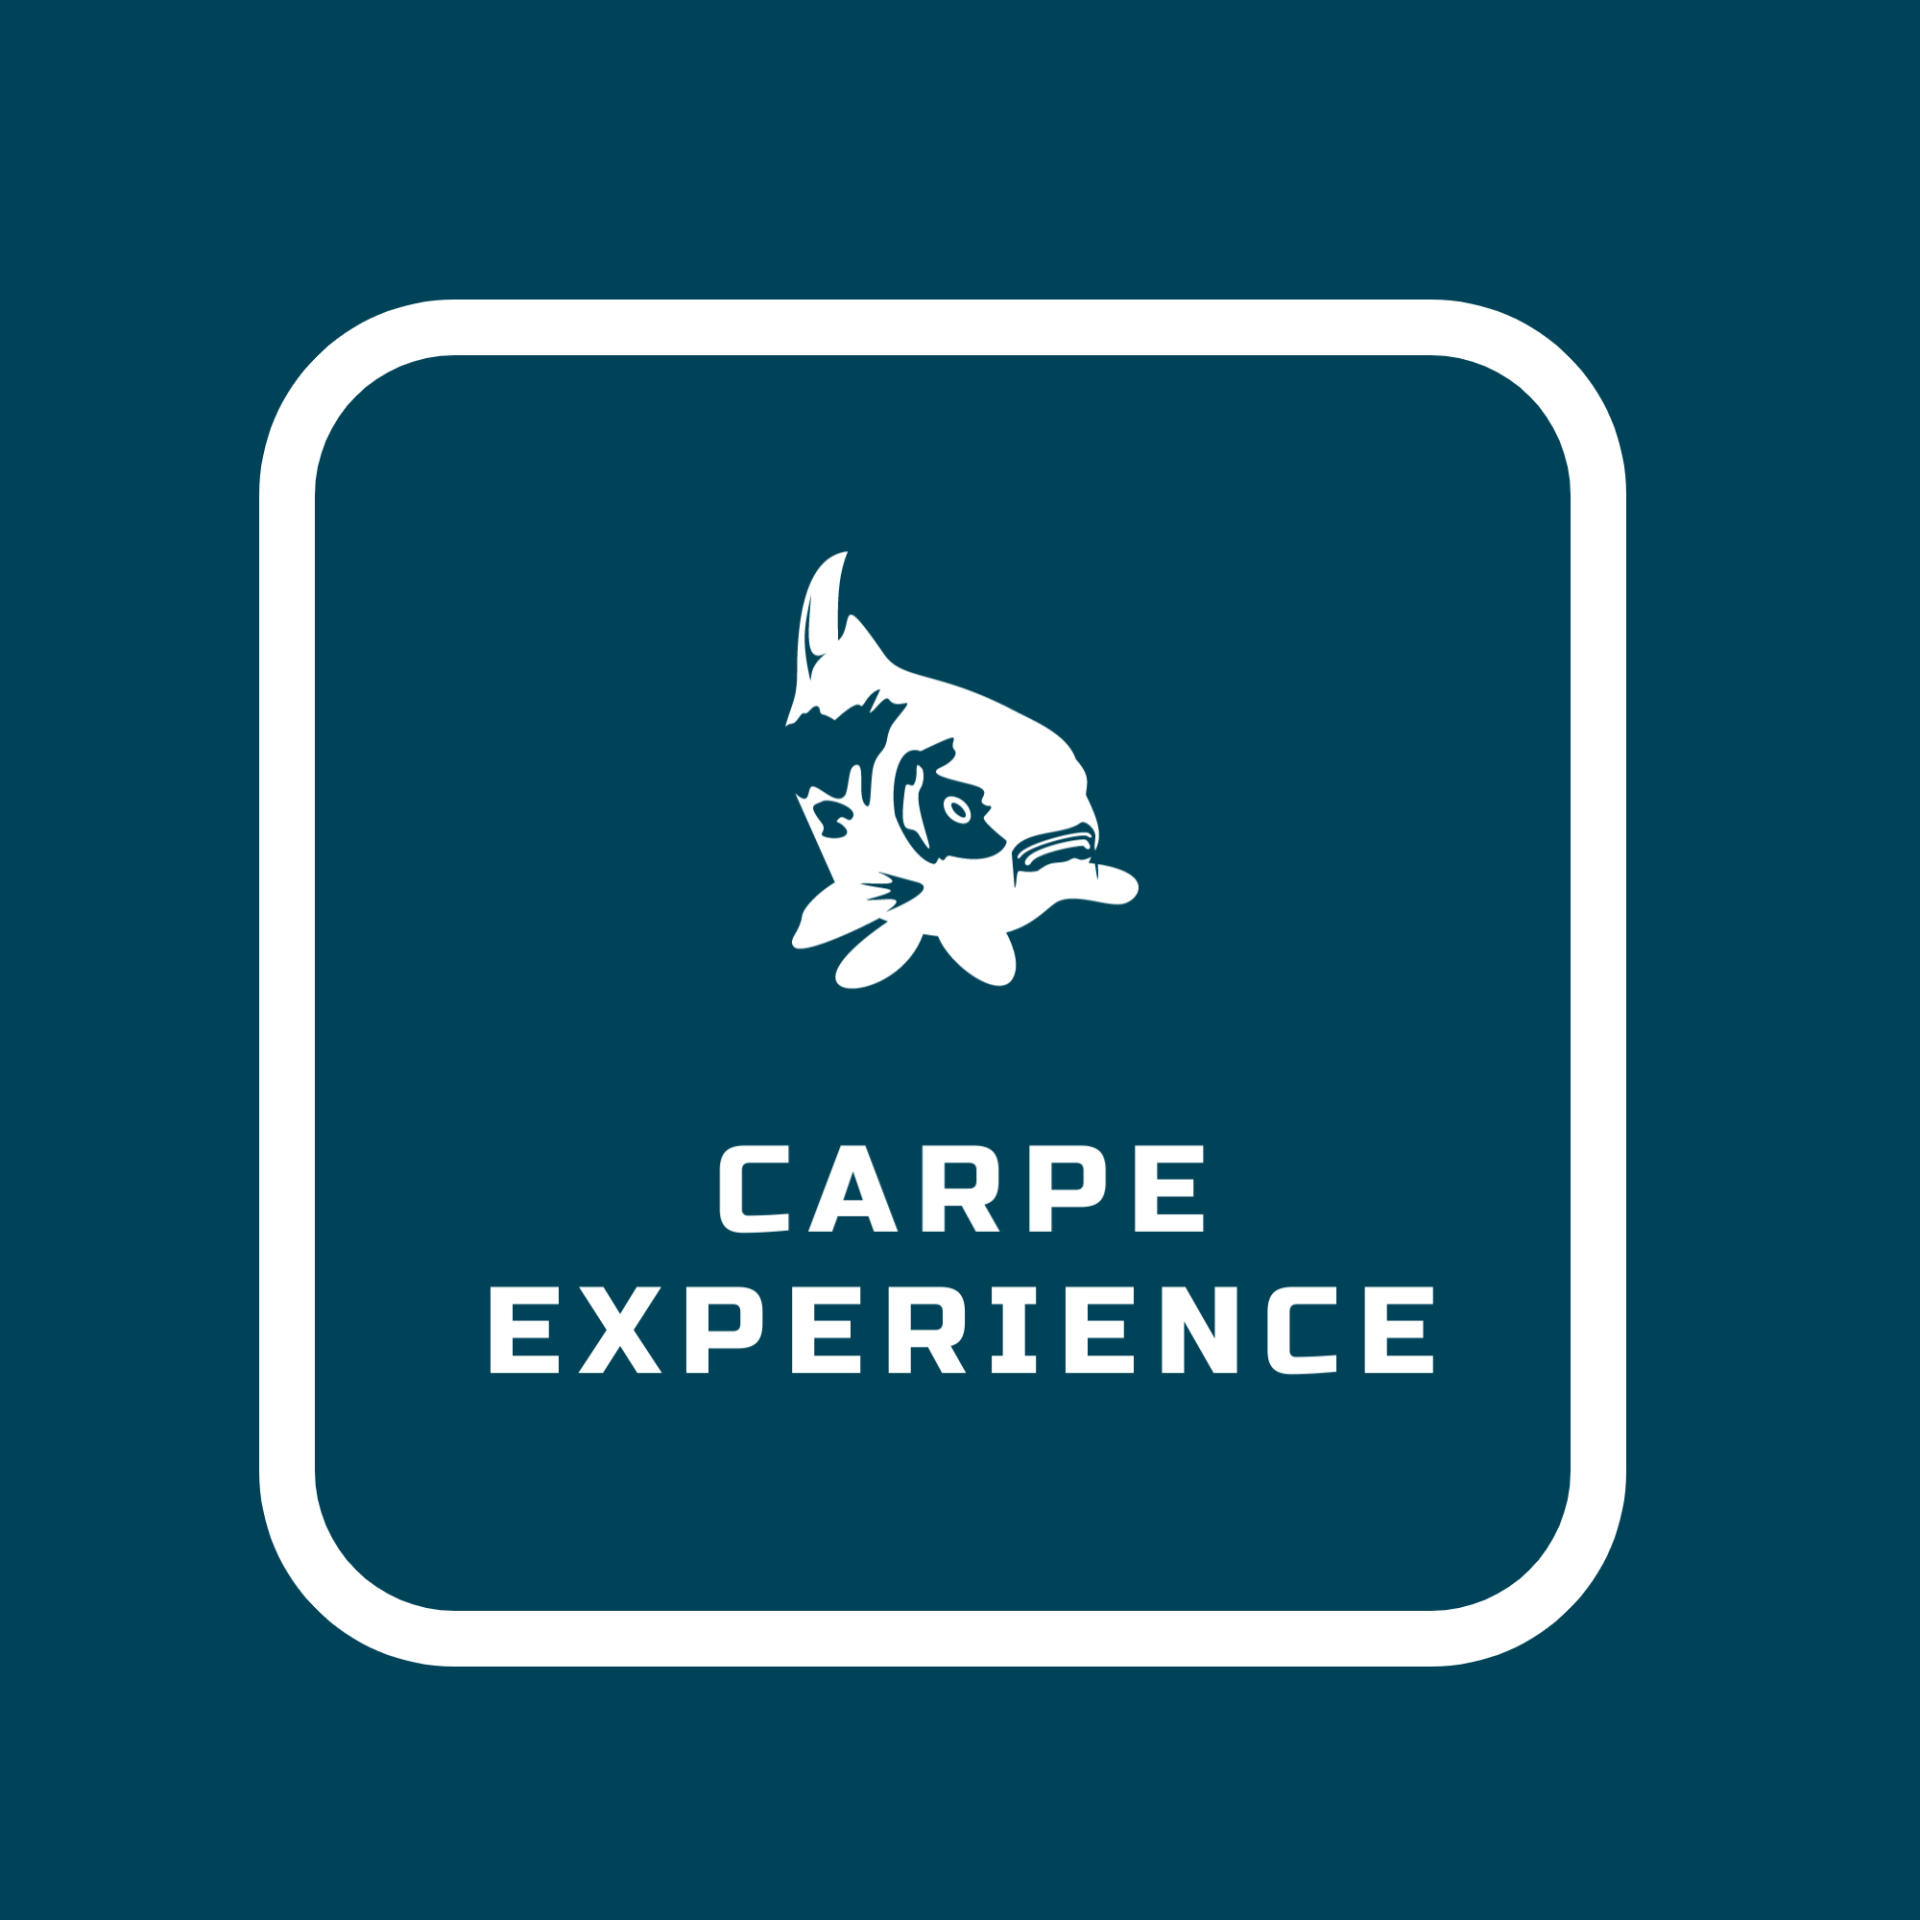 CARPE EXPERIENCE